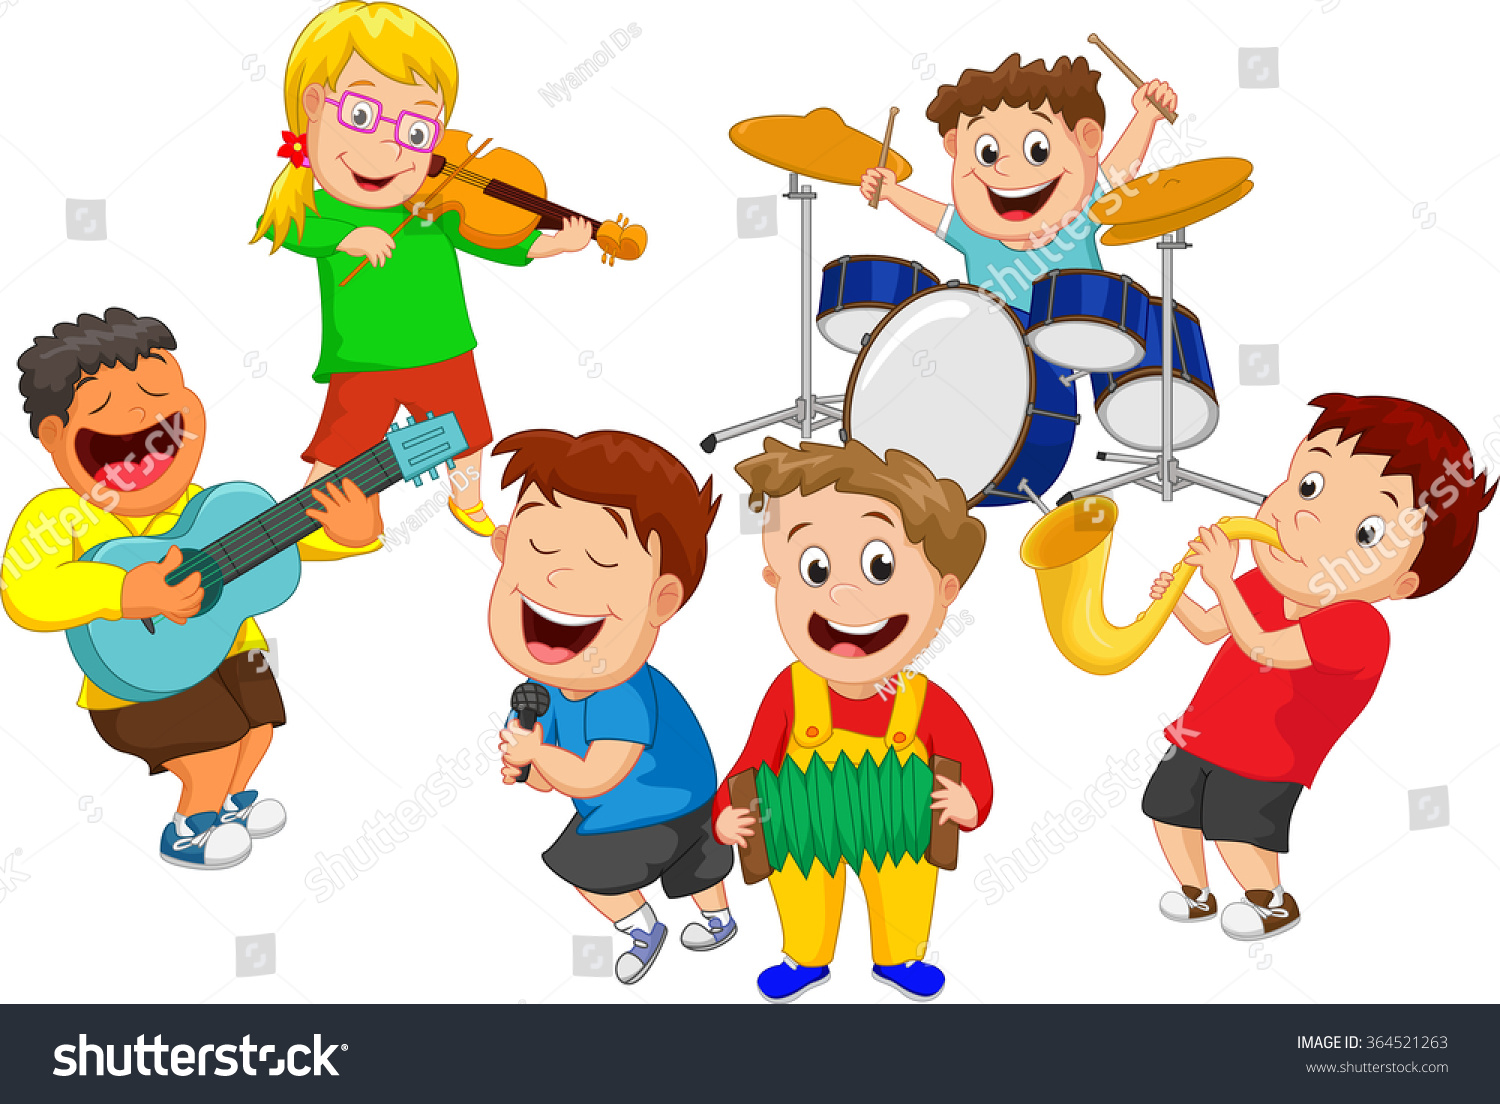 Illustration Children Playing Music Instrument Stock Illustration 364521263